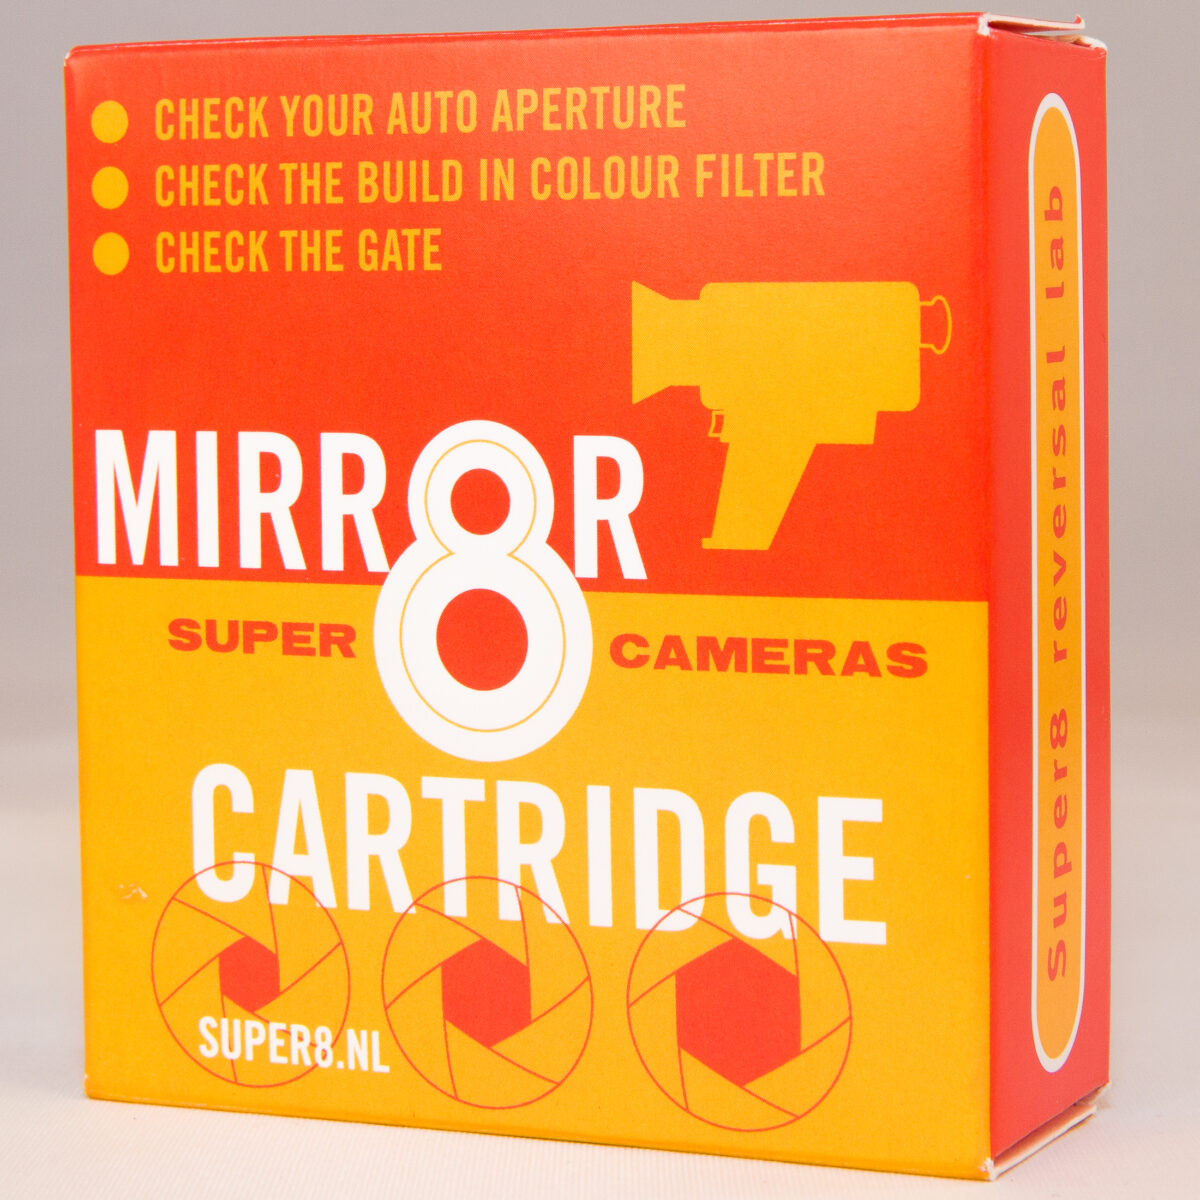 Mirror-Cartridge-Super8